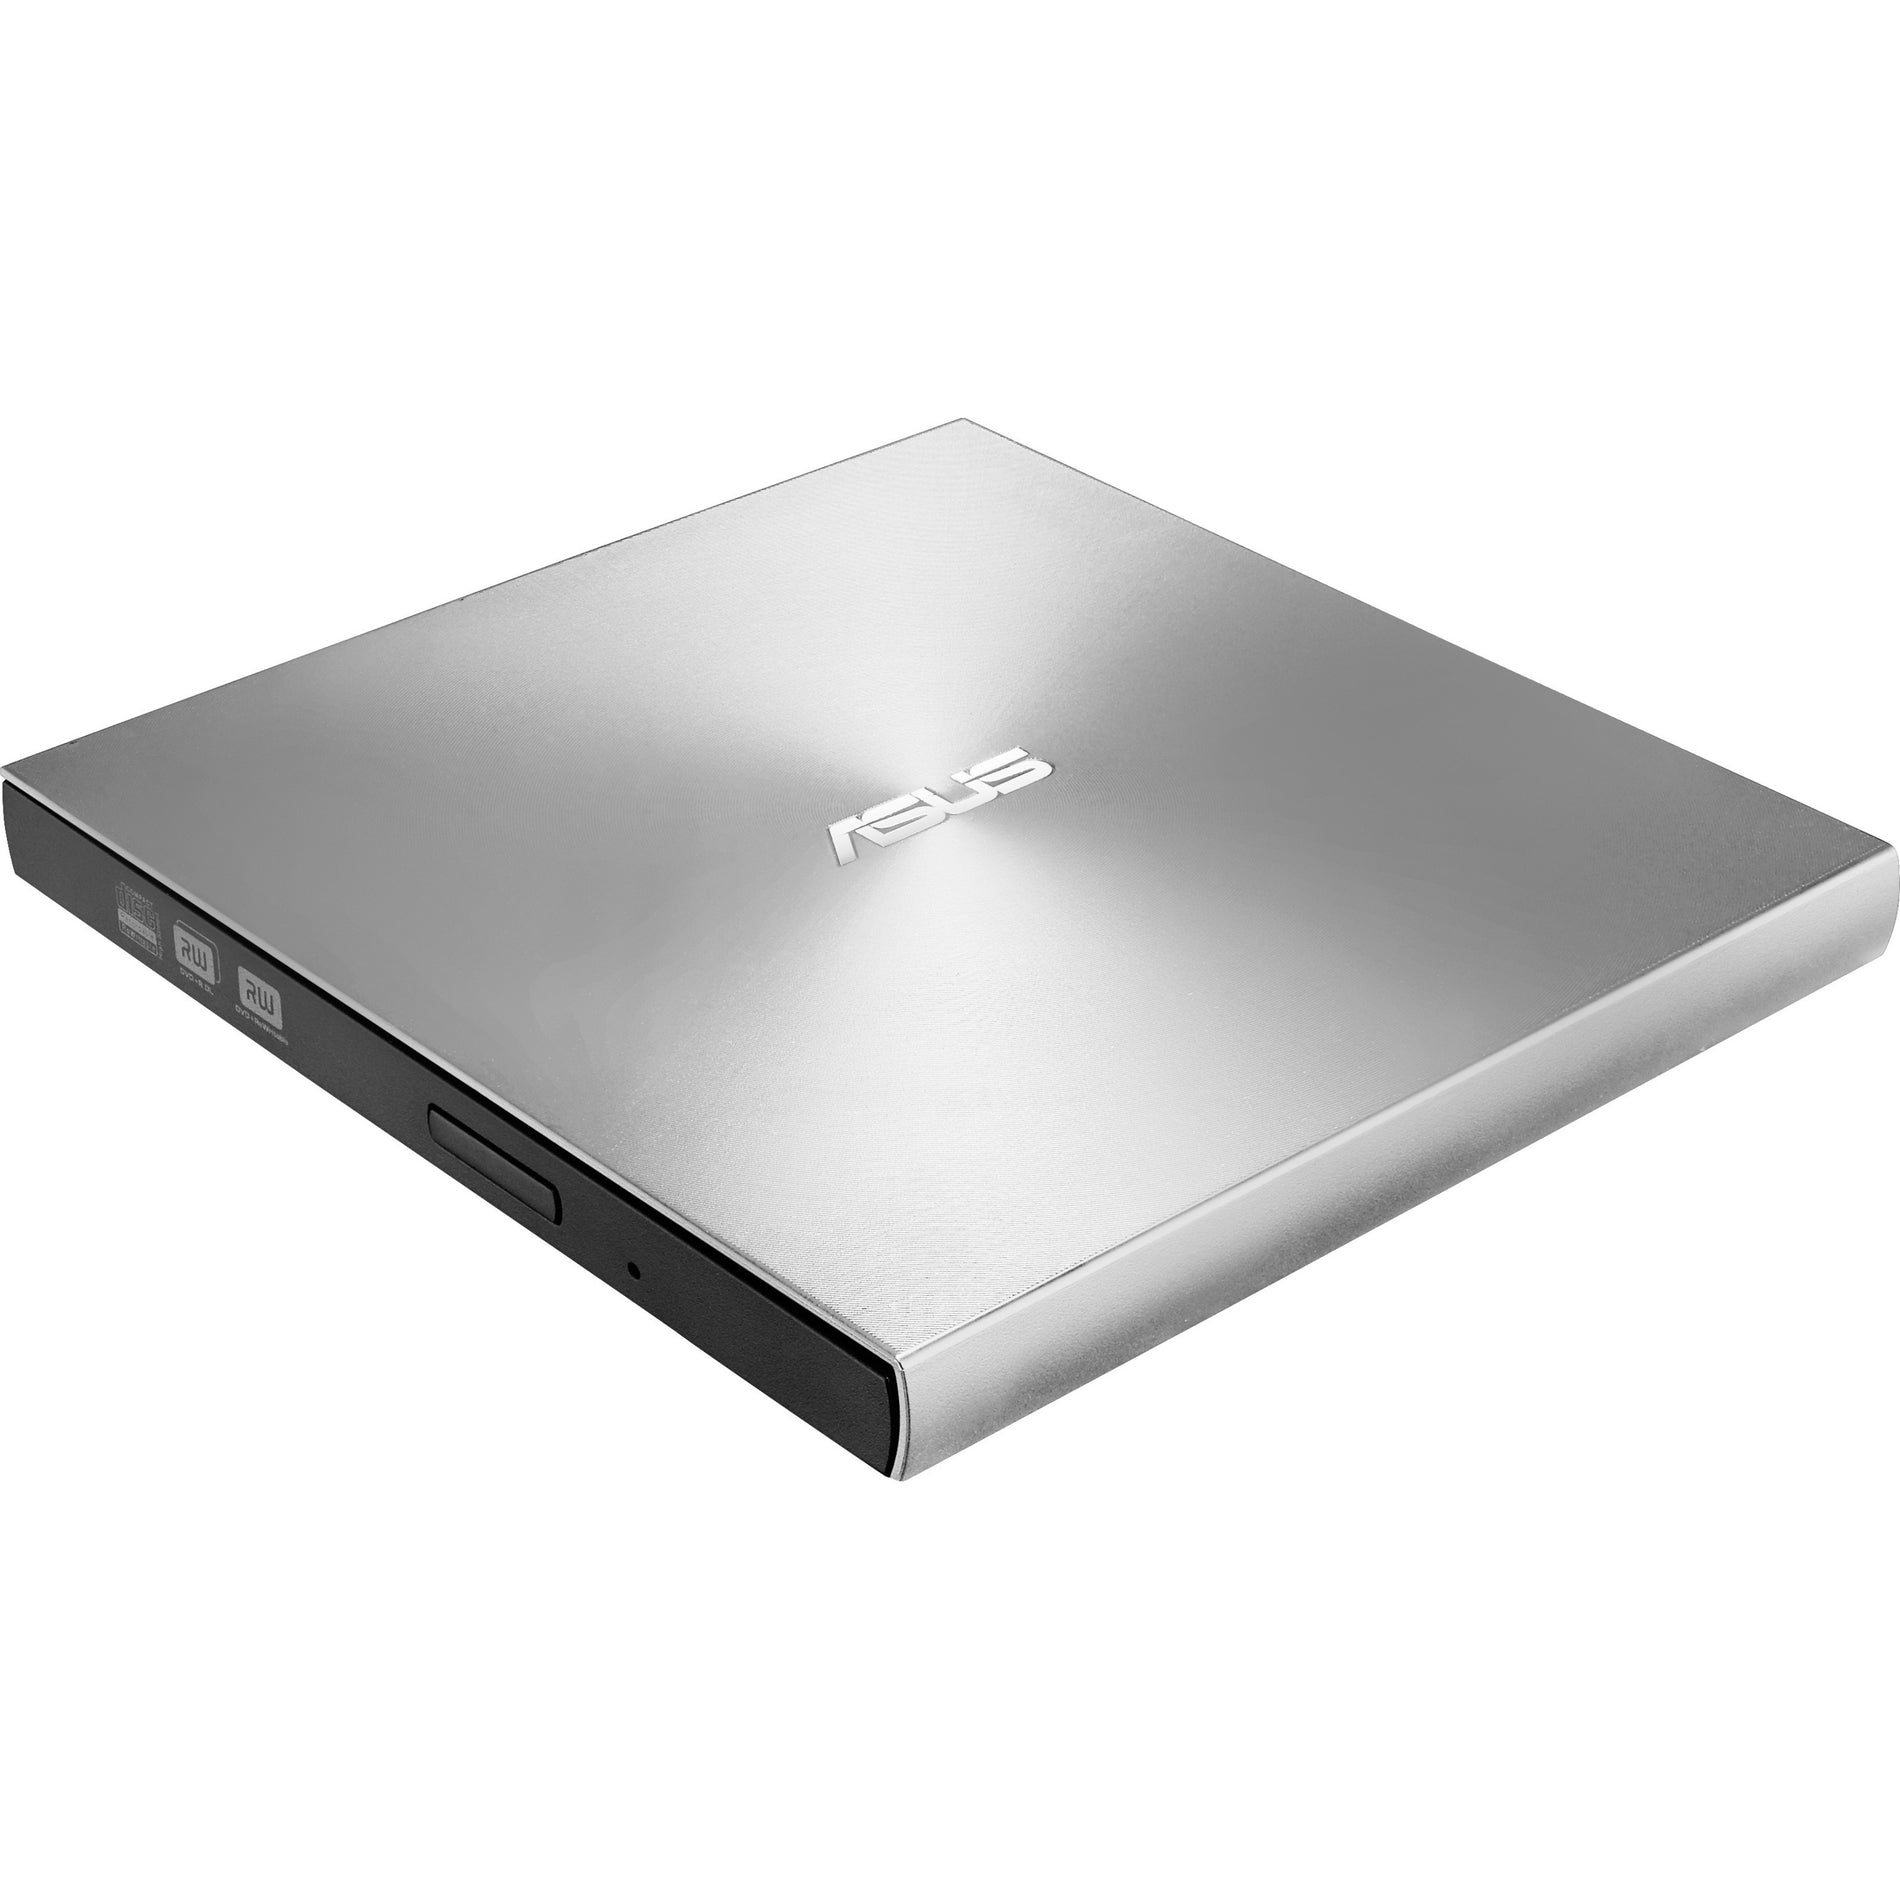 ASUS SDRW-08U9M-U/SIL/G/AS/P2G ZenDrive SDRW-08U9M-U External DVD Writer, USB 2.0, Type-C, Mac/PC Compatible